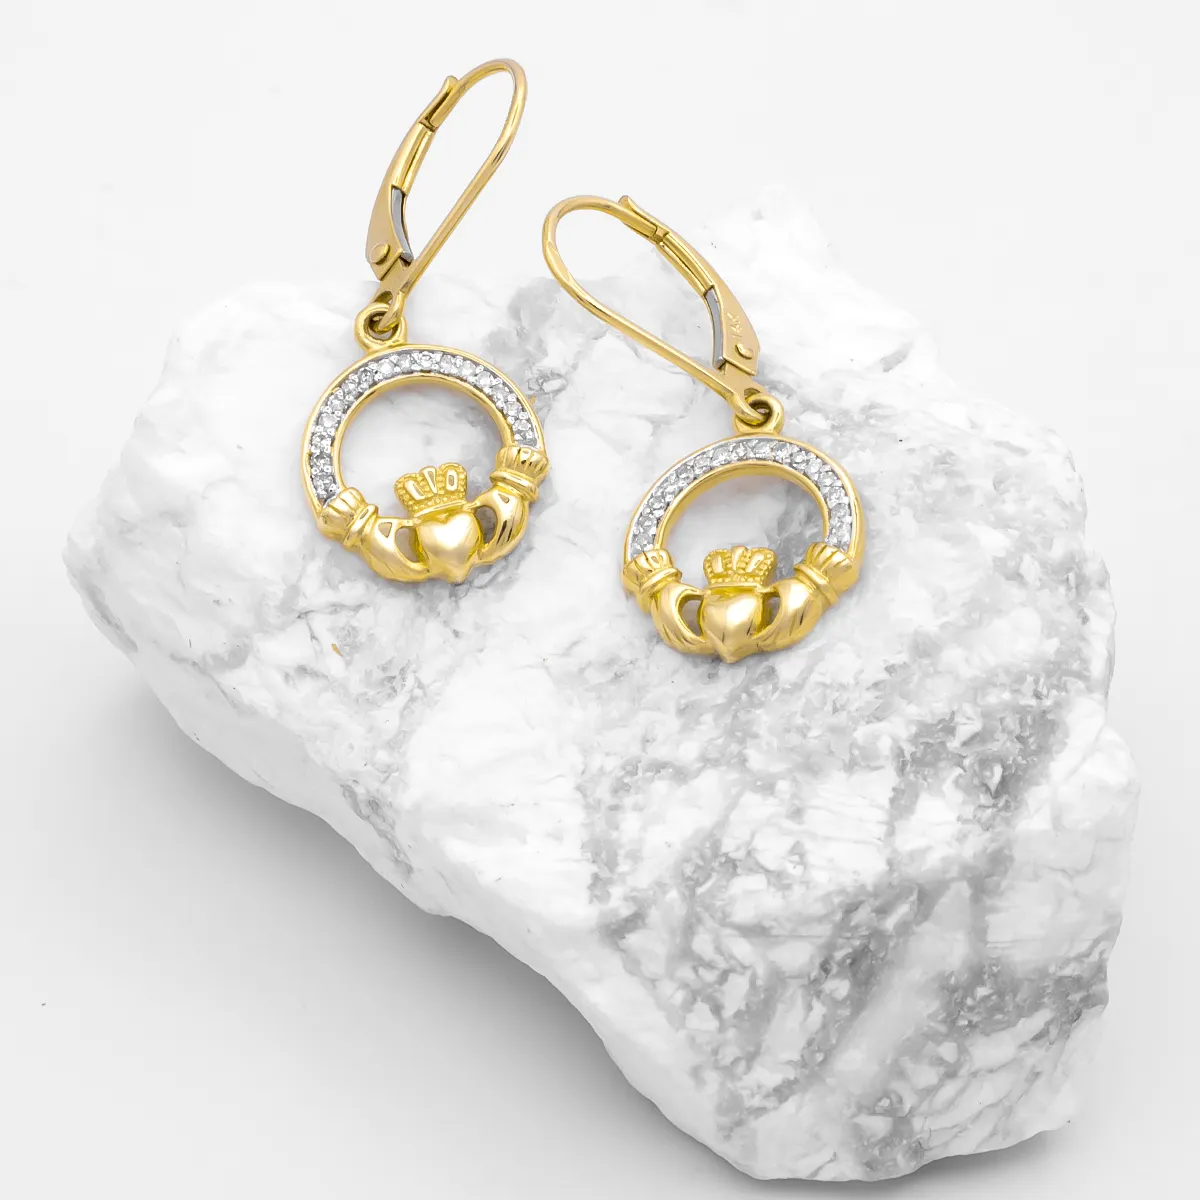 IJCE0012 Yellow Gold Claddagh Ring Earrings 6